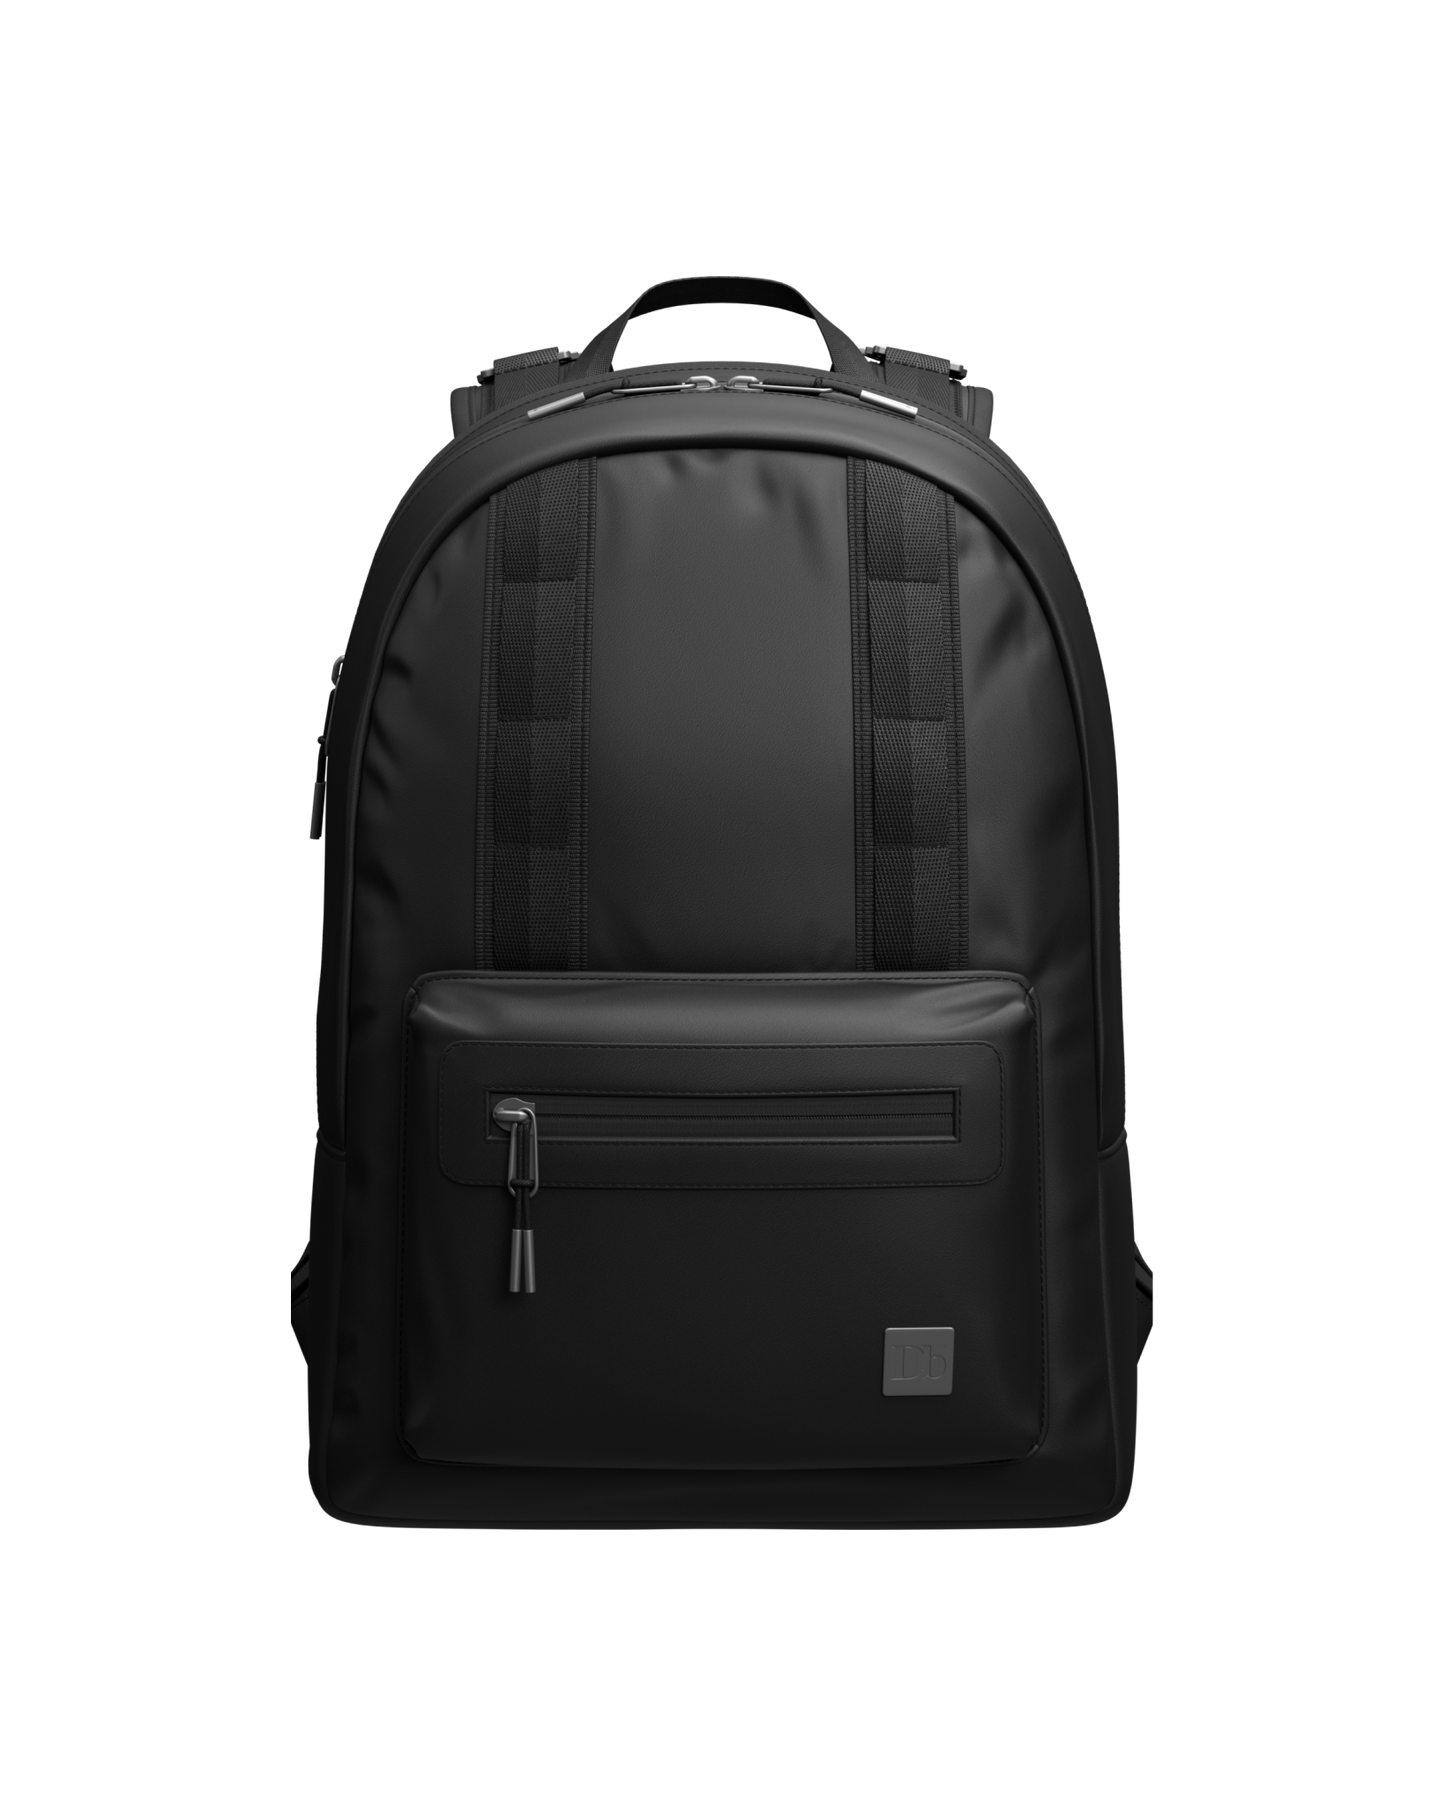 The Aera 16L Backpack